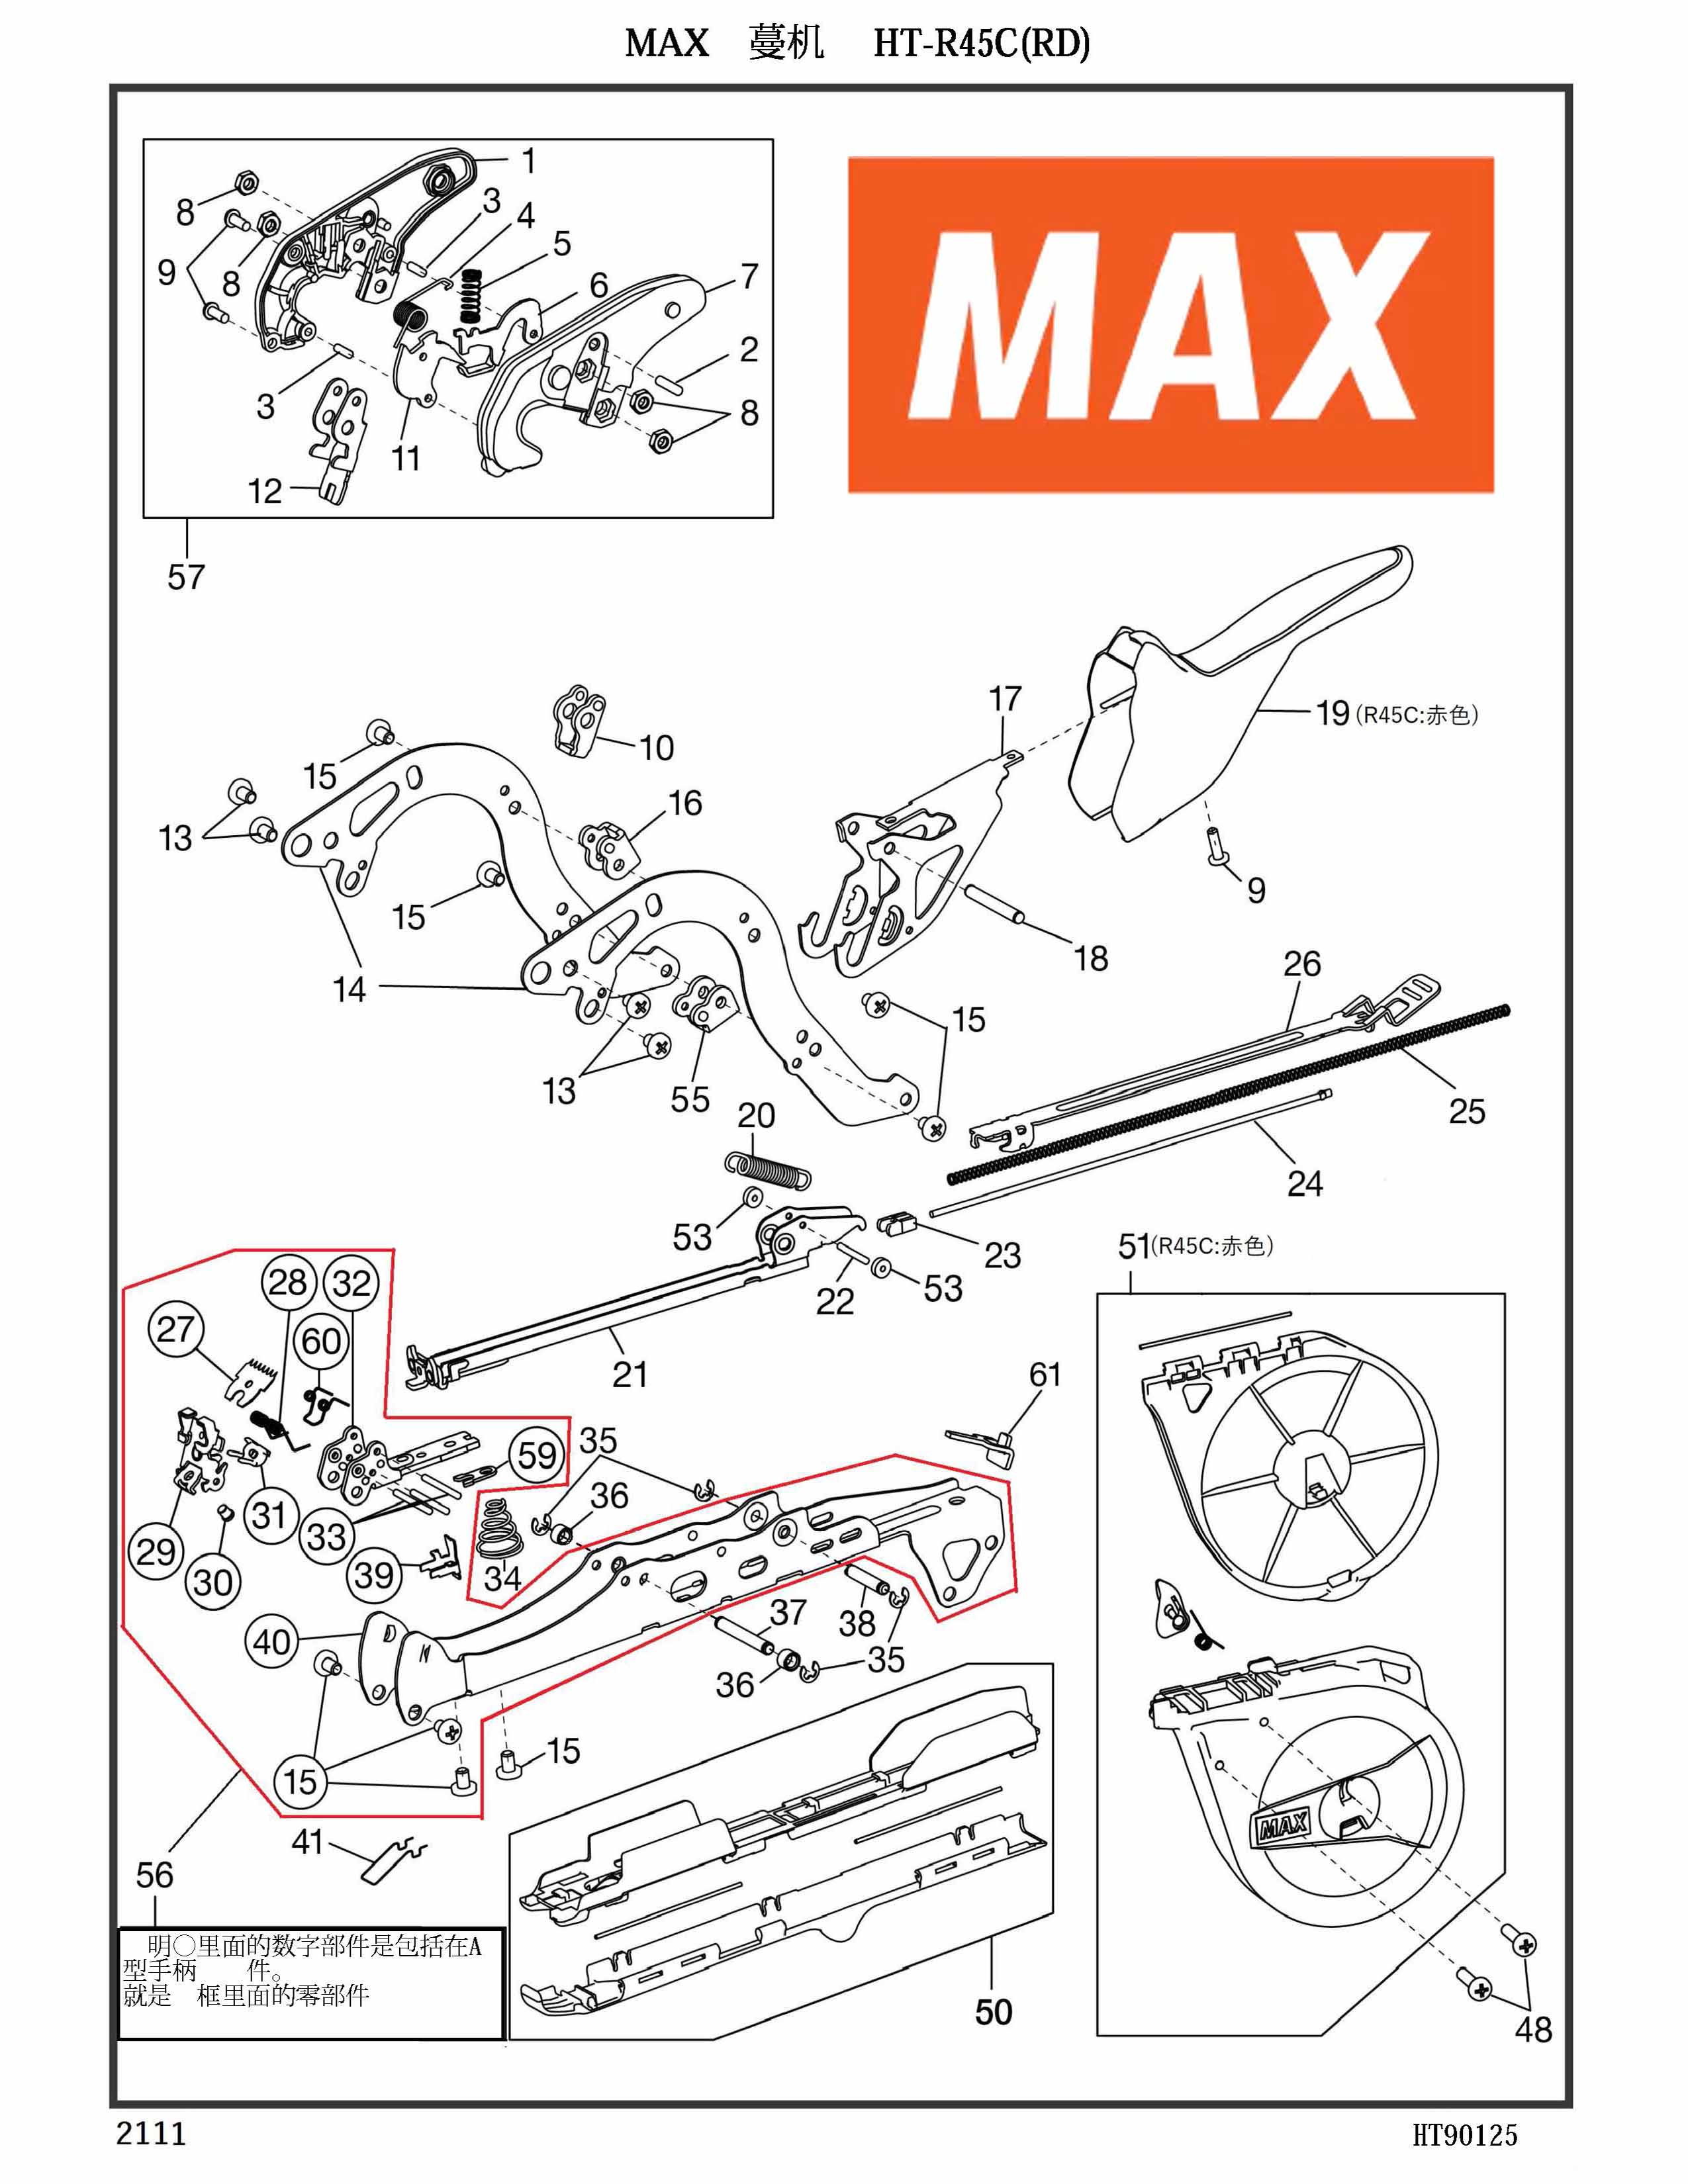 MAX Tapener Part HT11615 ROLLER (HT-R) Fits MAX HT-R45L(O) R45C(RD) HT-S45E HT-R1 HT-R2 #36